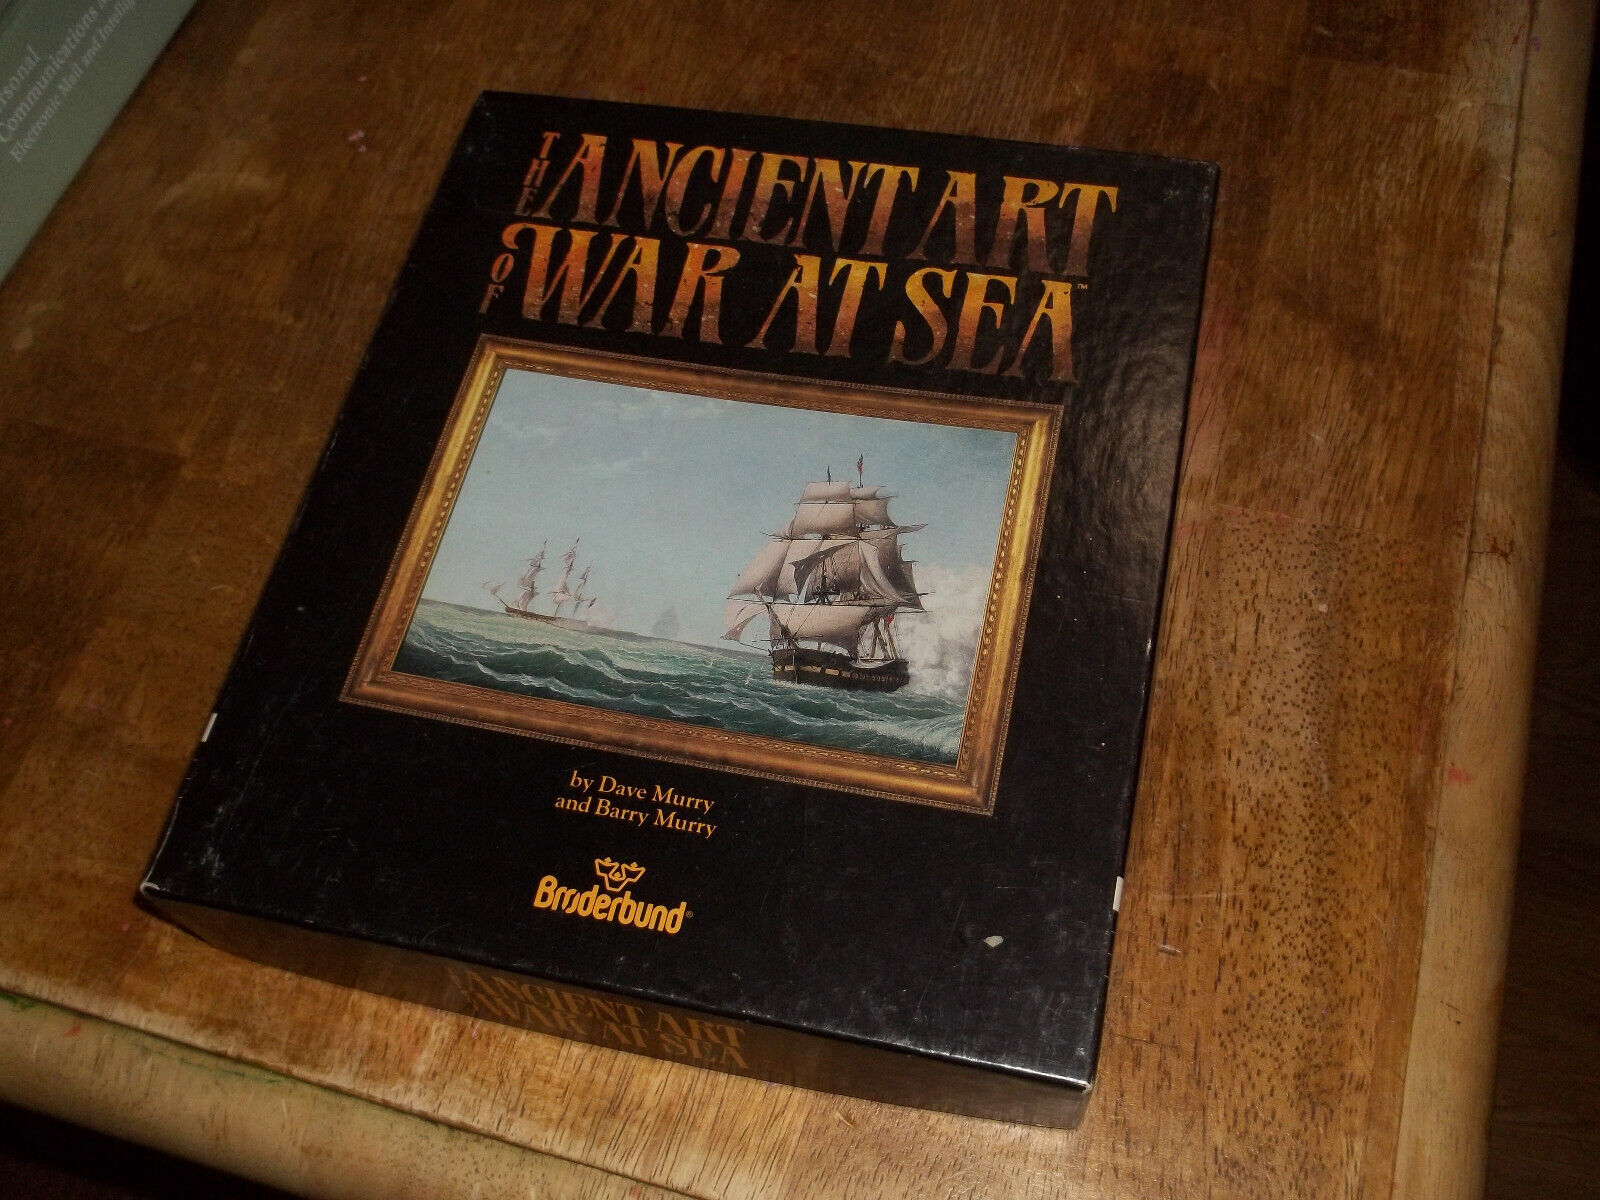 Vintage The Ancient Art Of War At Sea Macintosh Game Software 1988